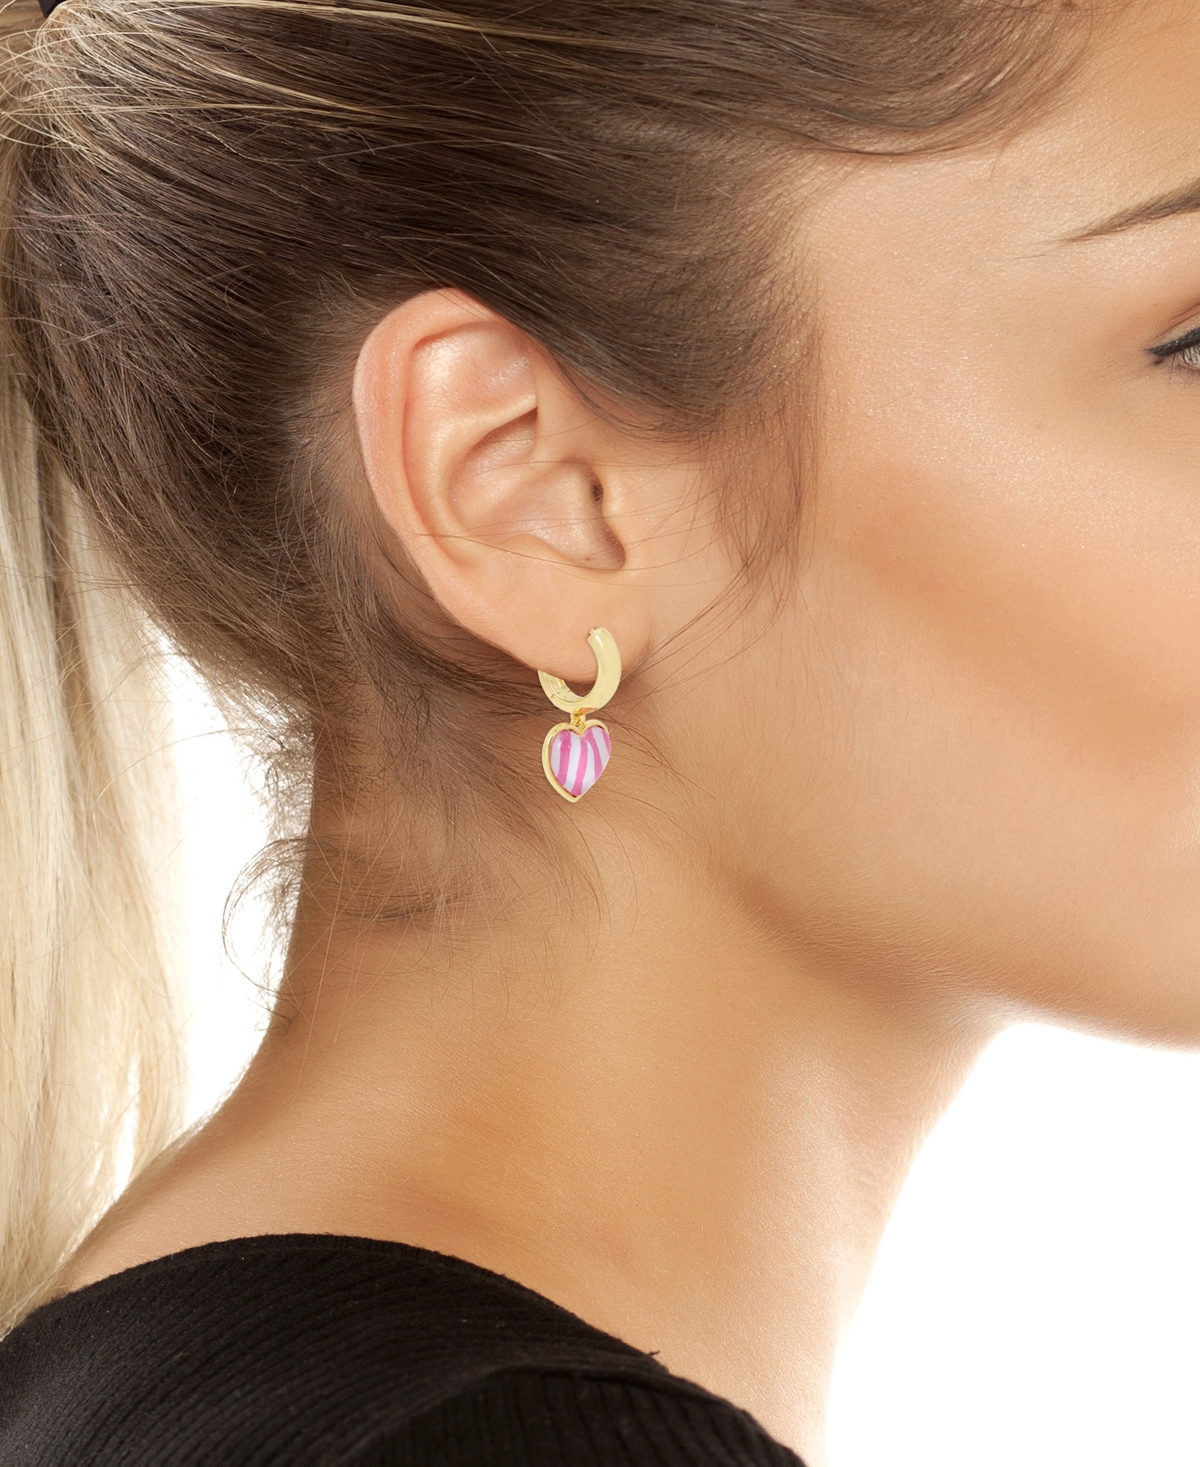 Shop Betsey Johnson Pink Heart Charm Huggie Earrings